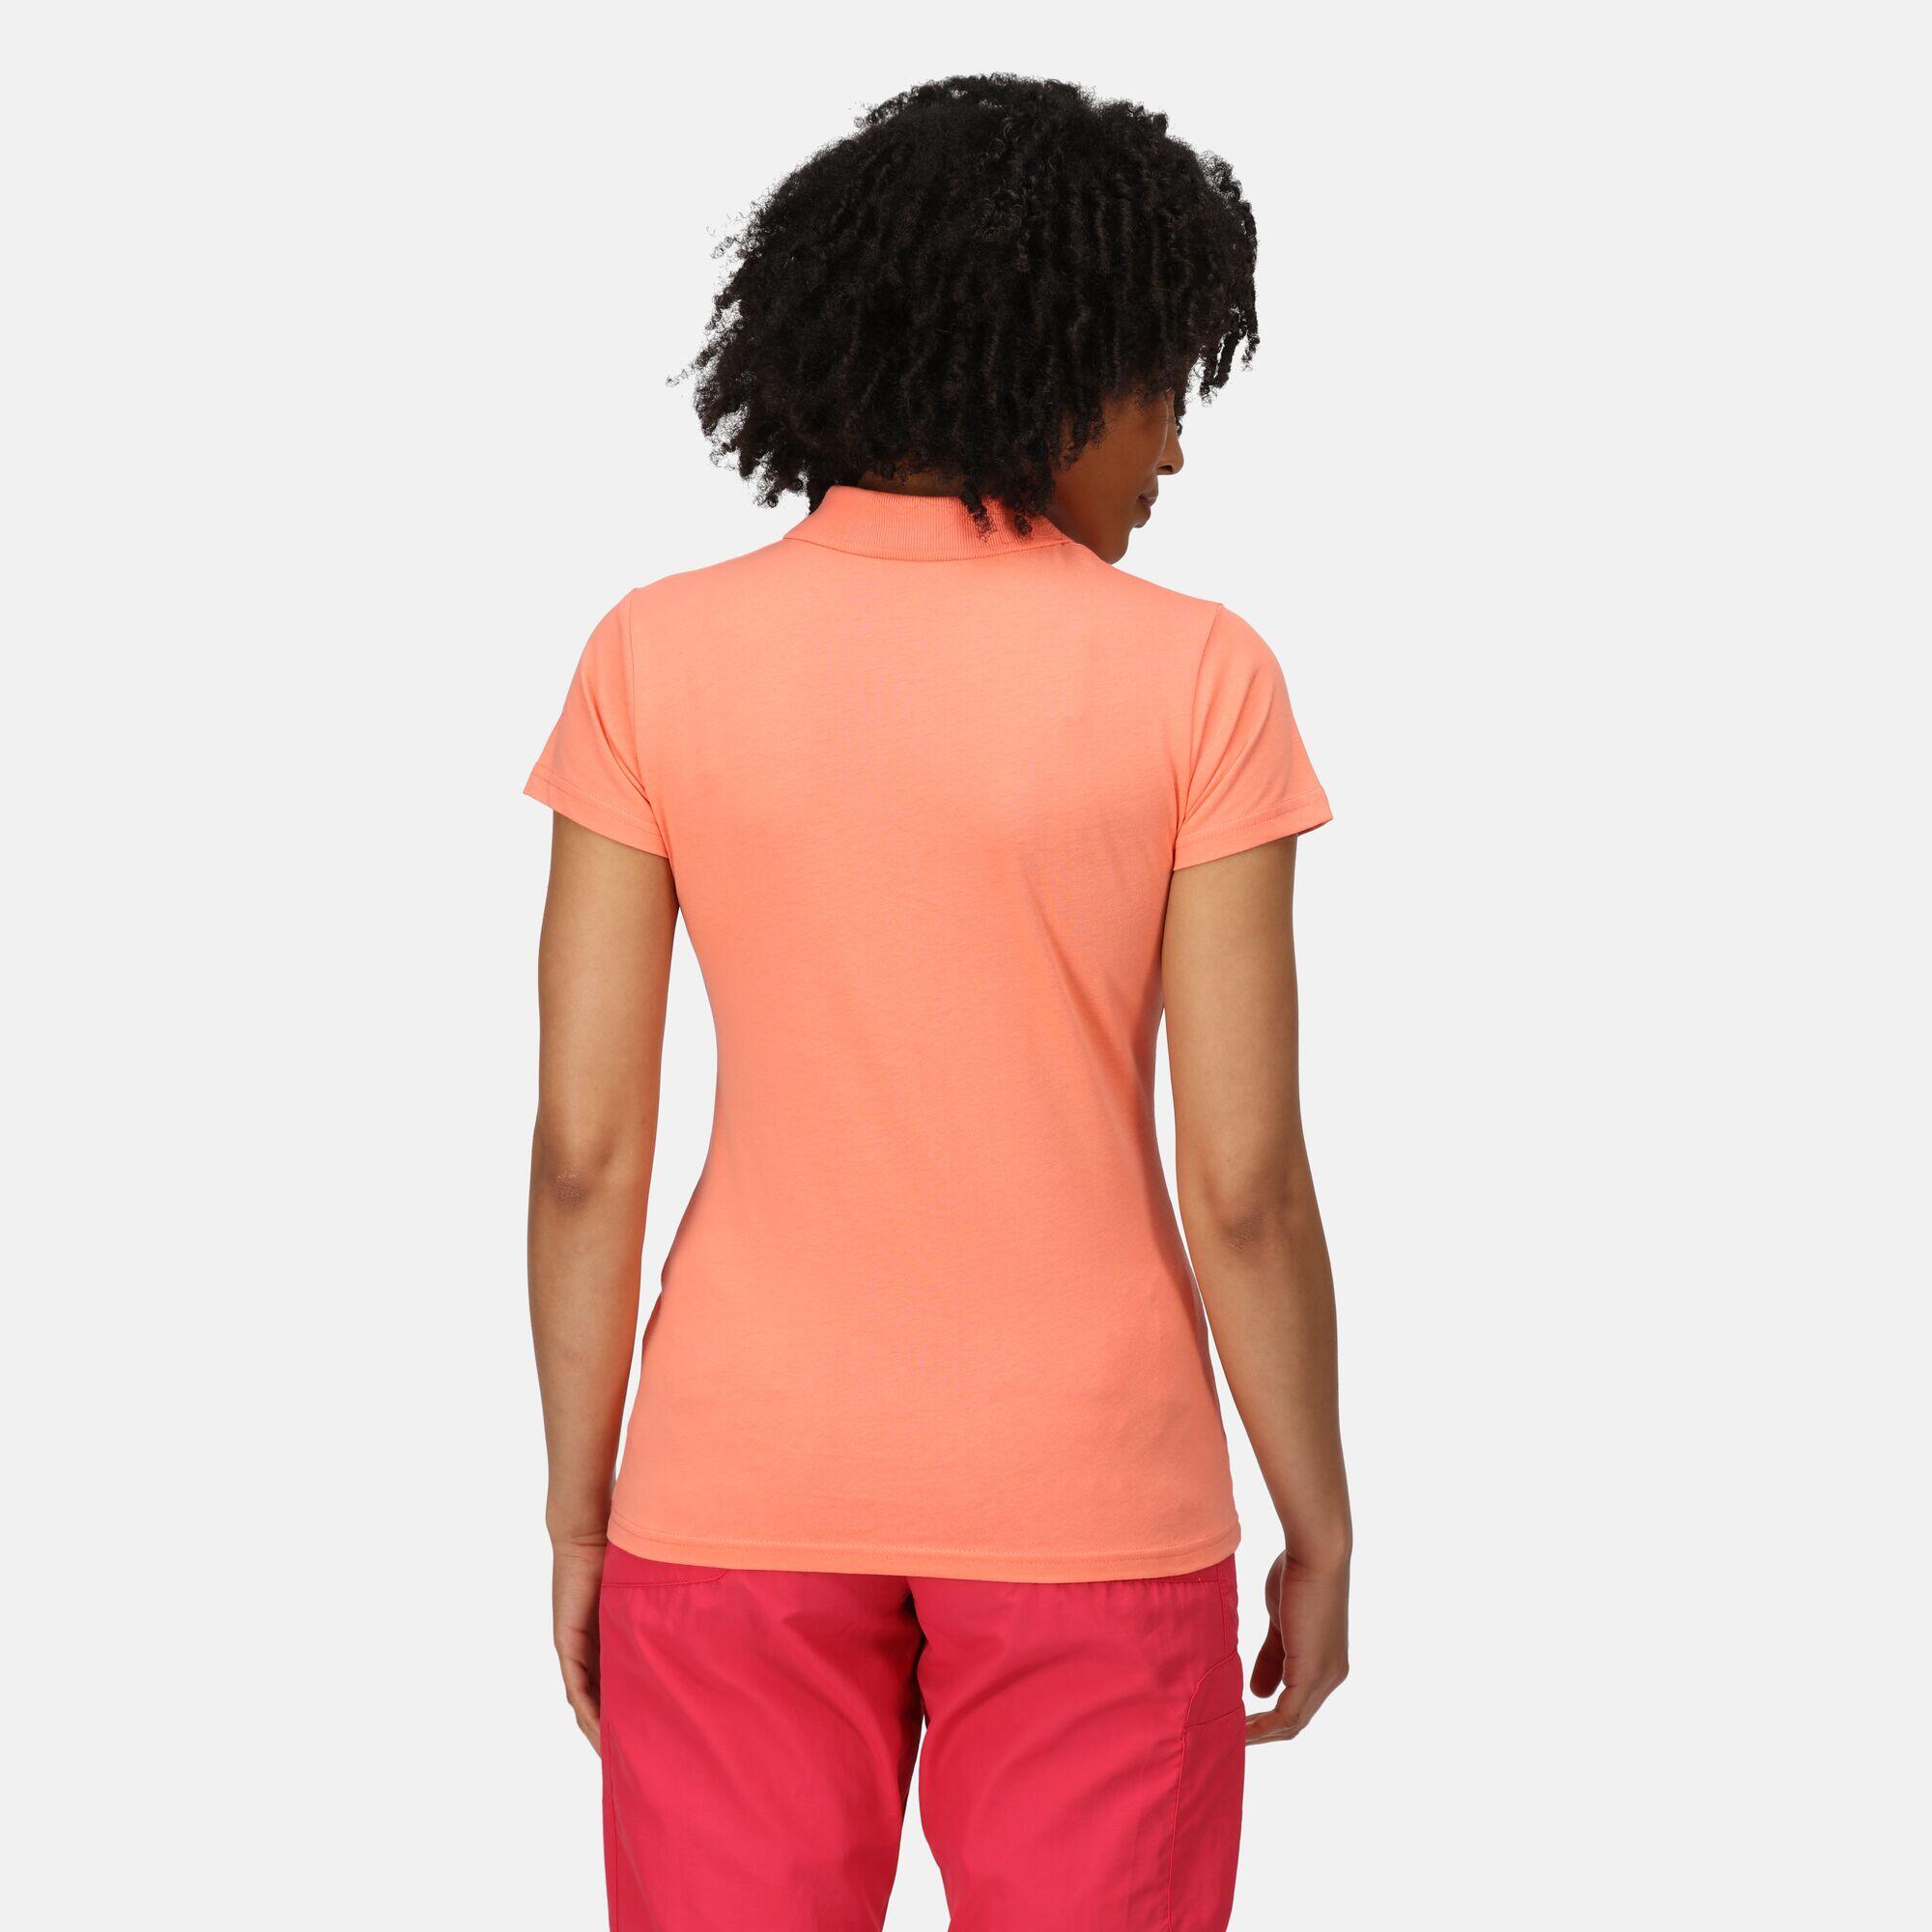 Sinton Women's Fitness Short Sleeve T-Shirt - Pink Coral 2/5